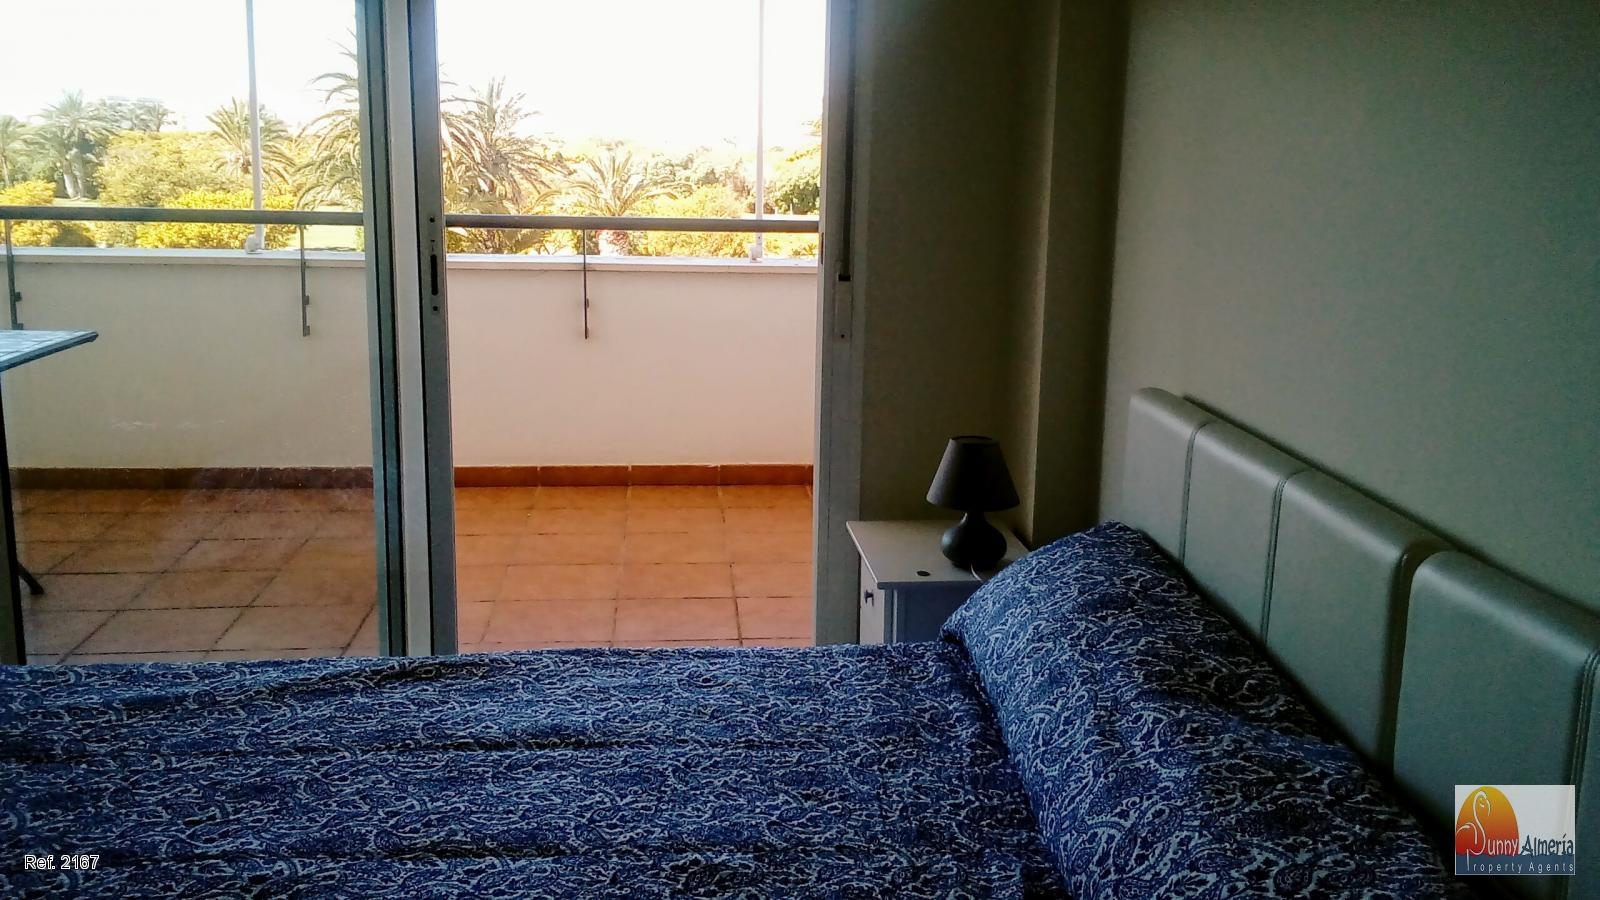 Apartment for sale in Carretera Ciudad de Cadiz 1A (Roquetas de Mar), 180.000 €